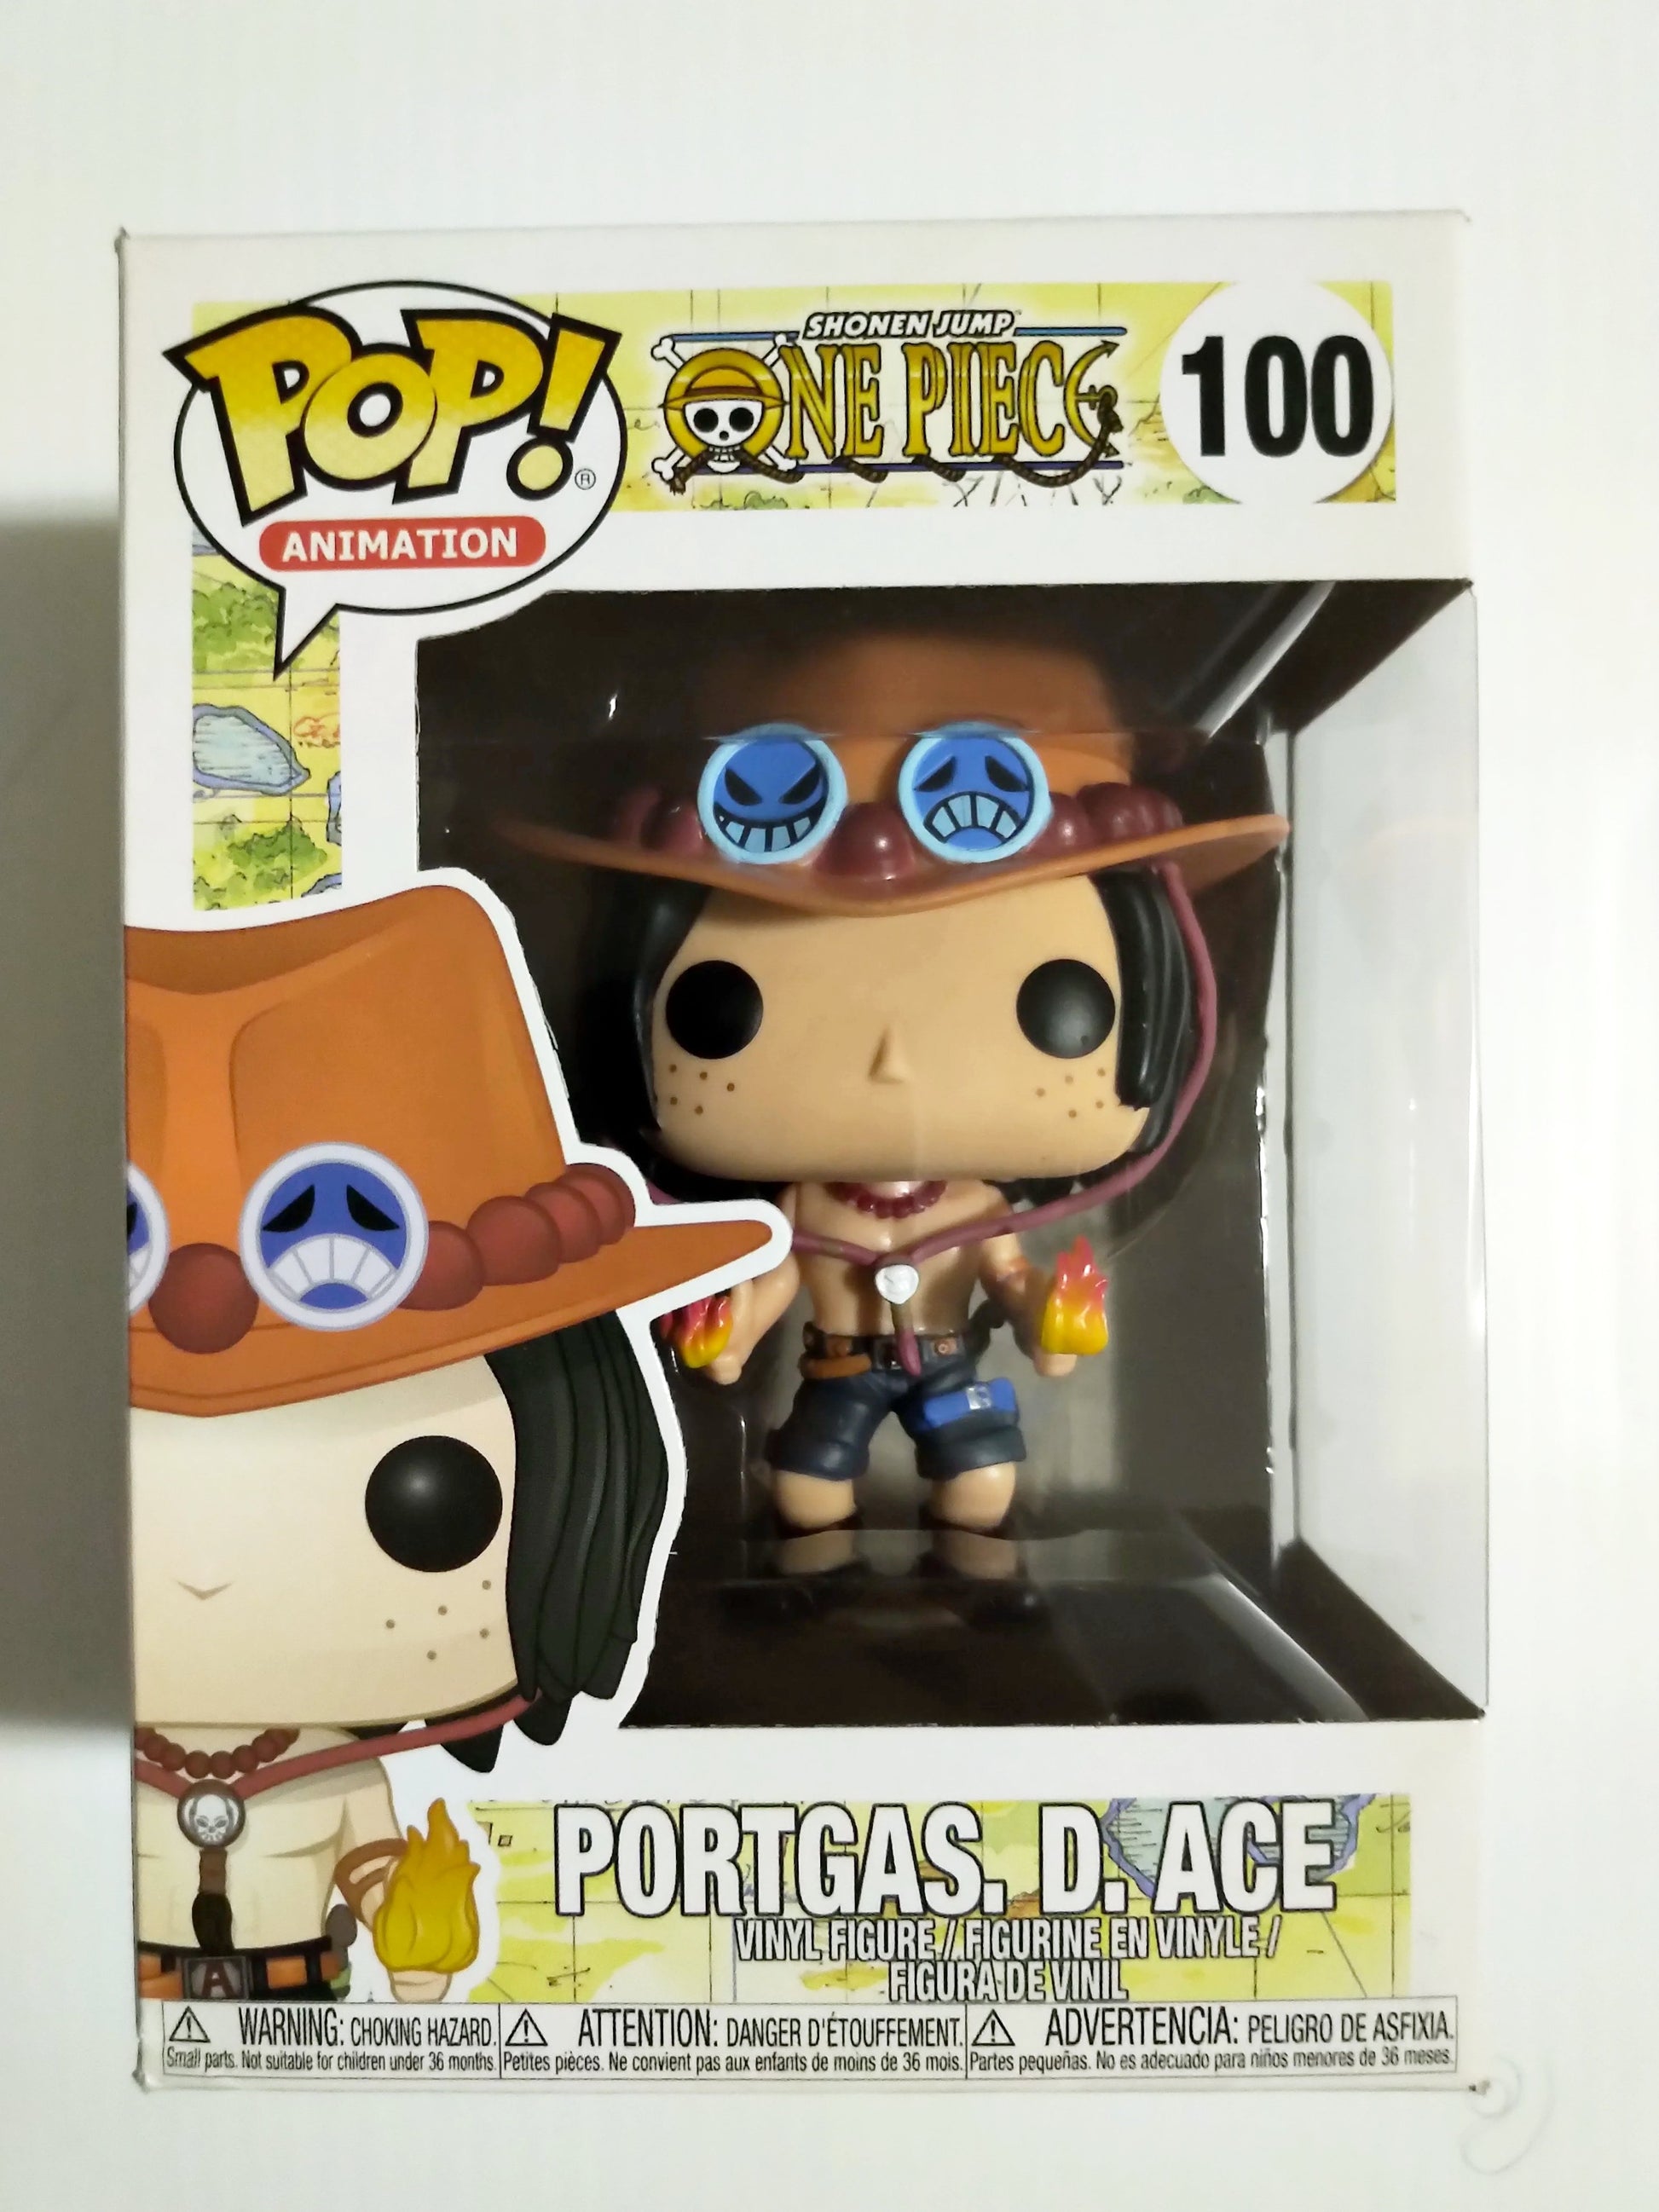 Figurine POP! Portgas D. Ace (100) par Funko - One Piece